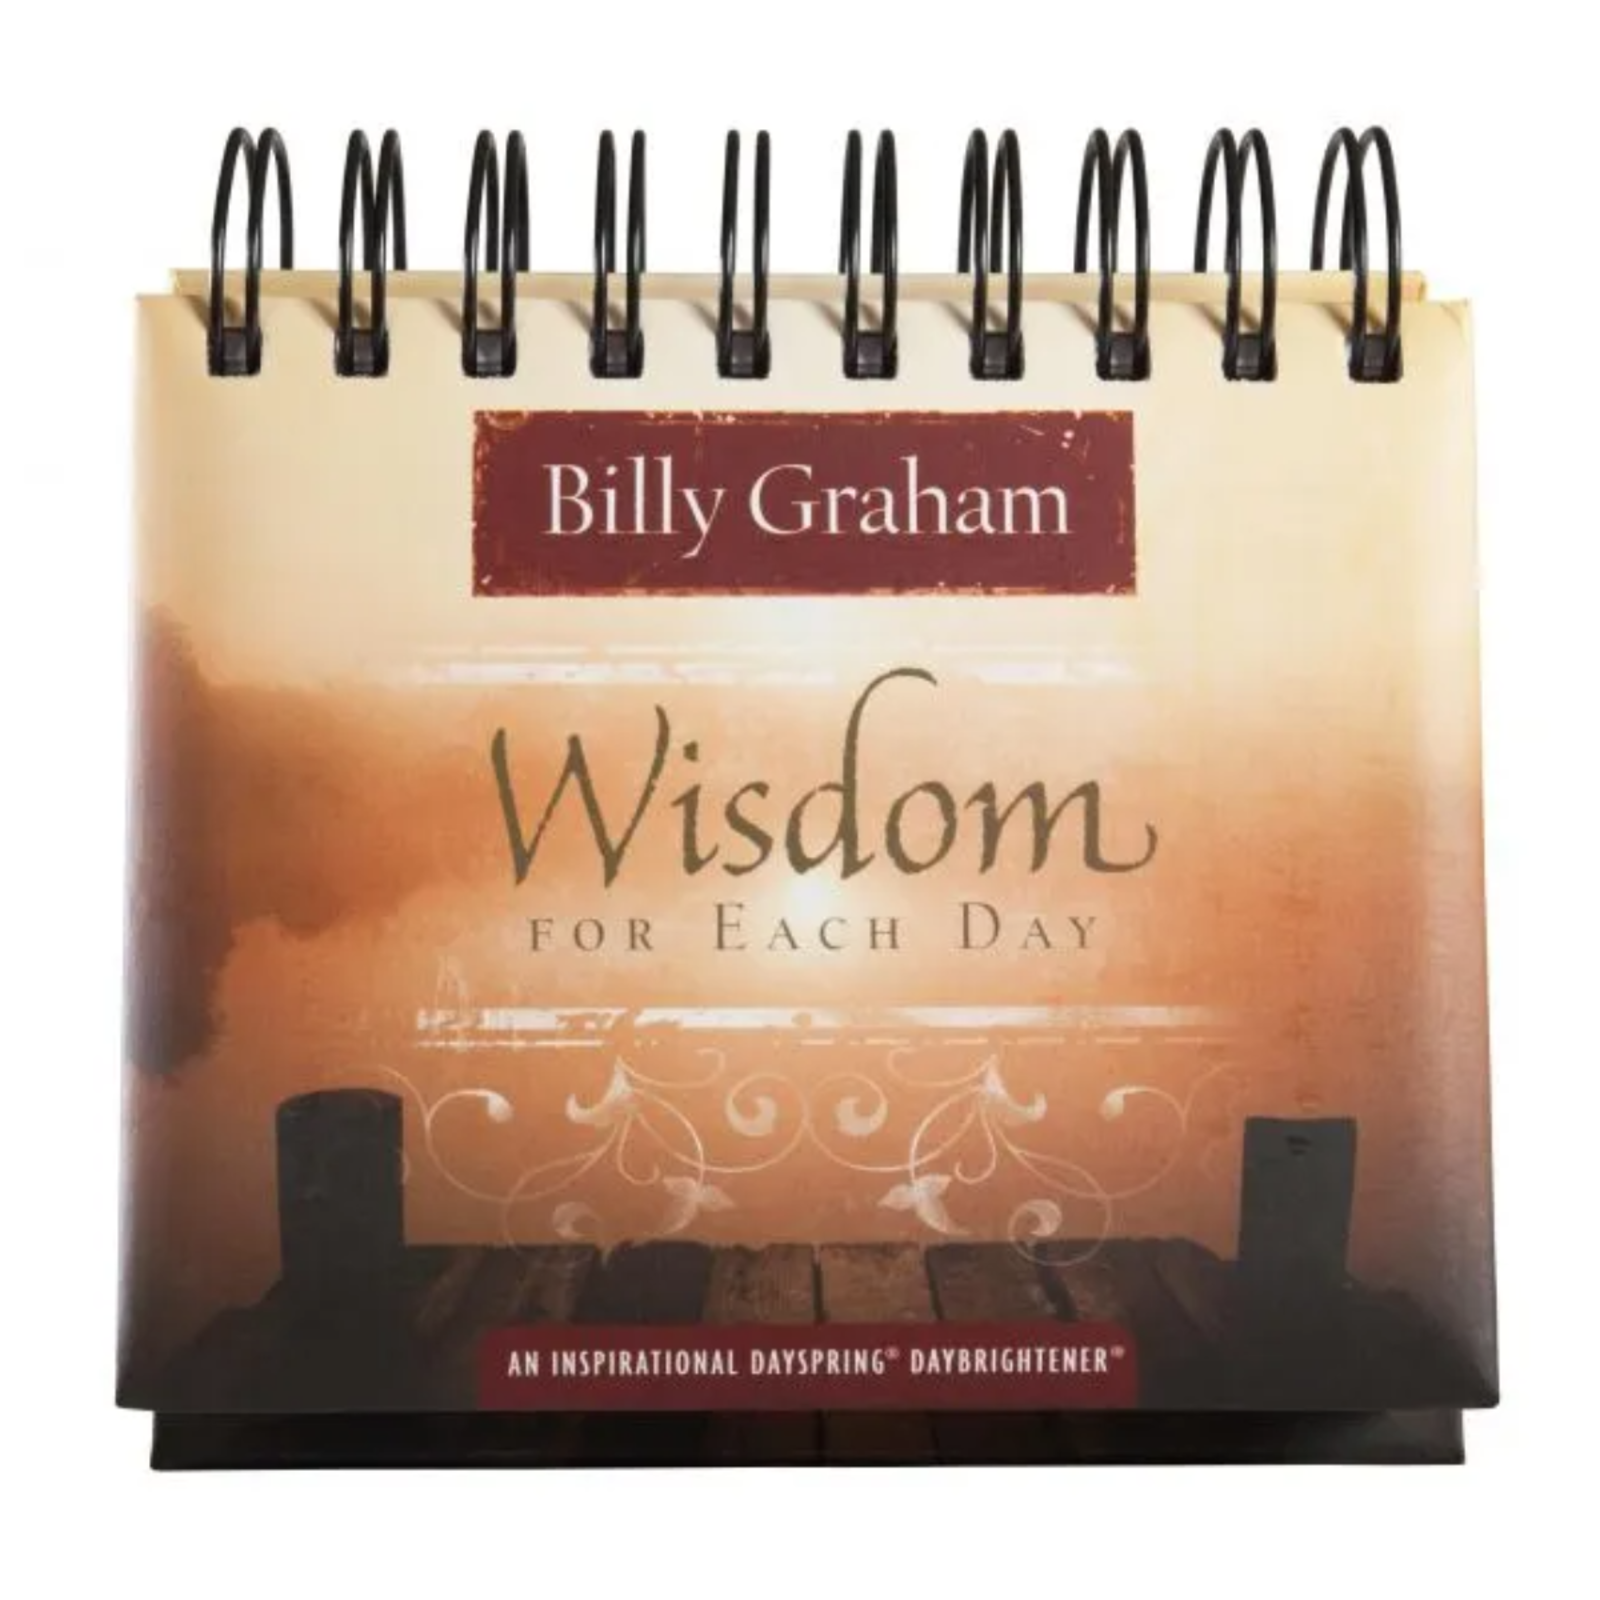 Dayspring Daybrightener- Billy Graham Wisdom for Each Day loading=